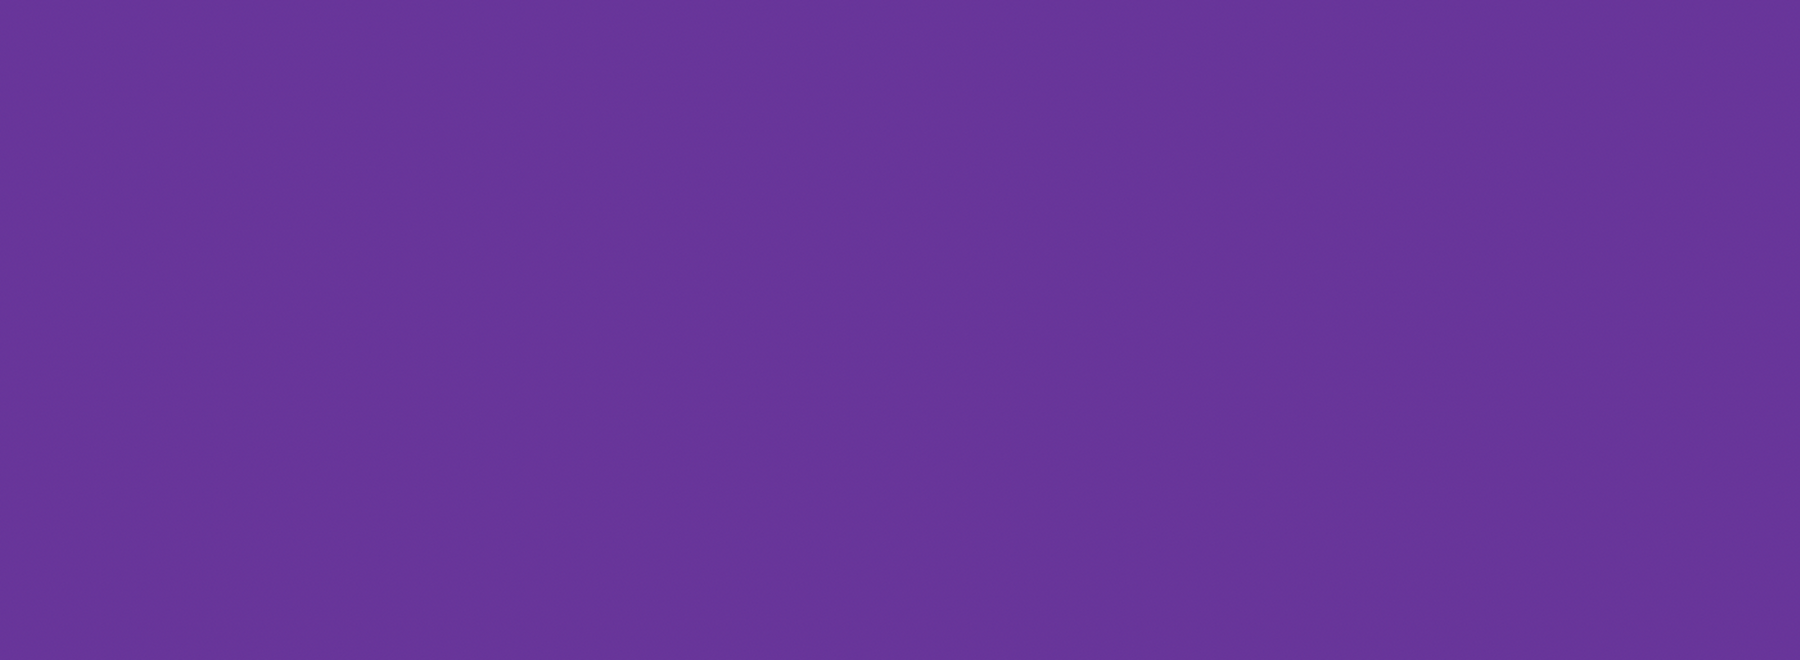 #PurpleLightUp 2022